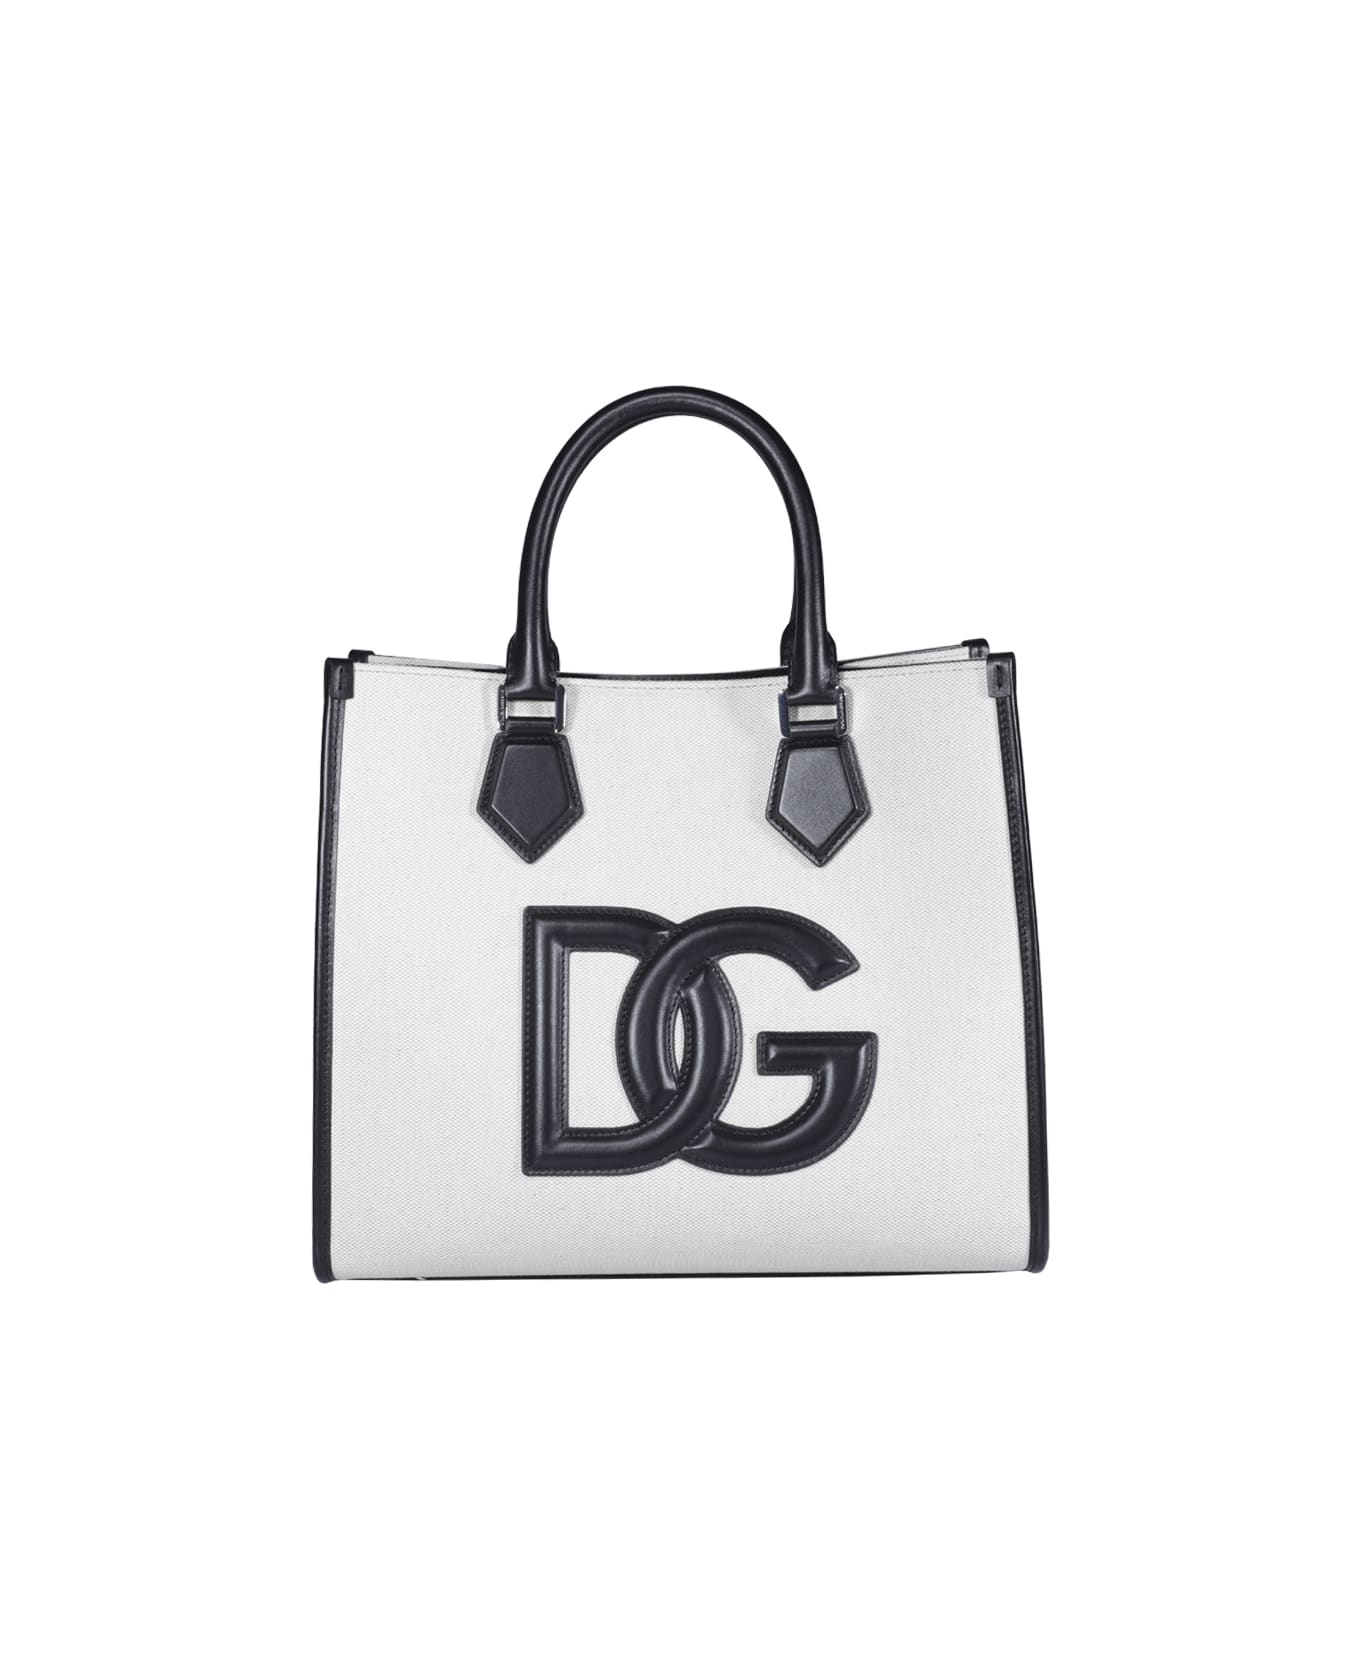 Dolce & Gabbana Sale E Pepe Shopping Bag - Avorio/nero